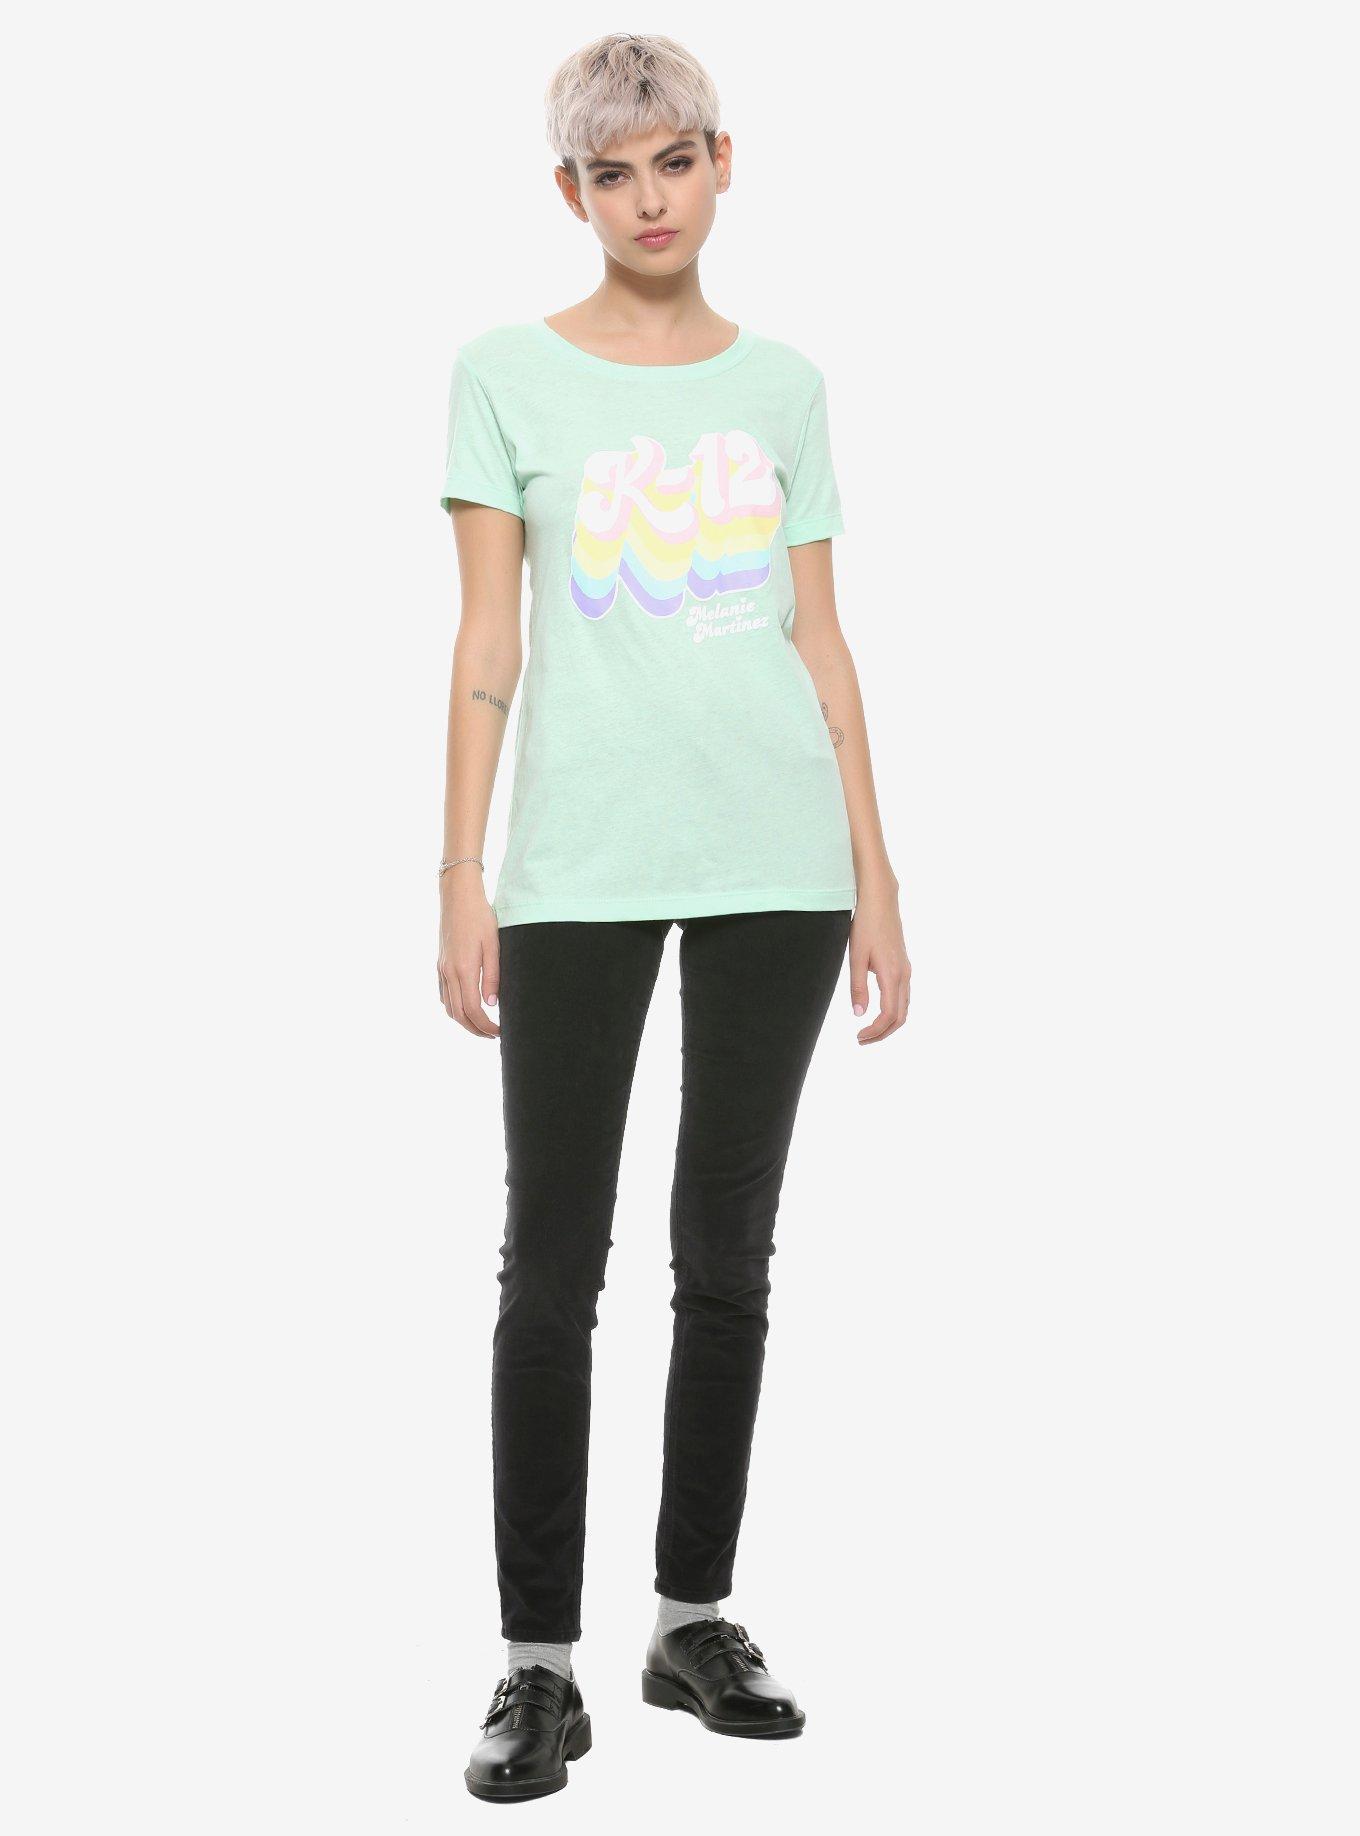 Melanie Martinez K-12 Rainbow Logo Girls T-Shirt, MINT, alternate